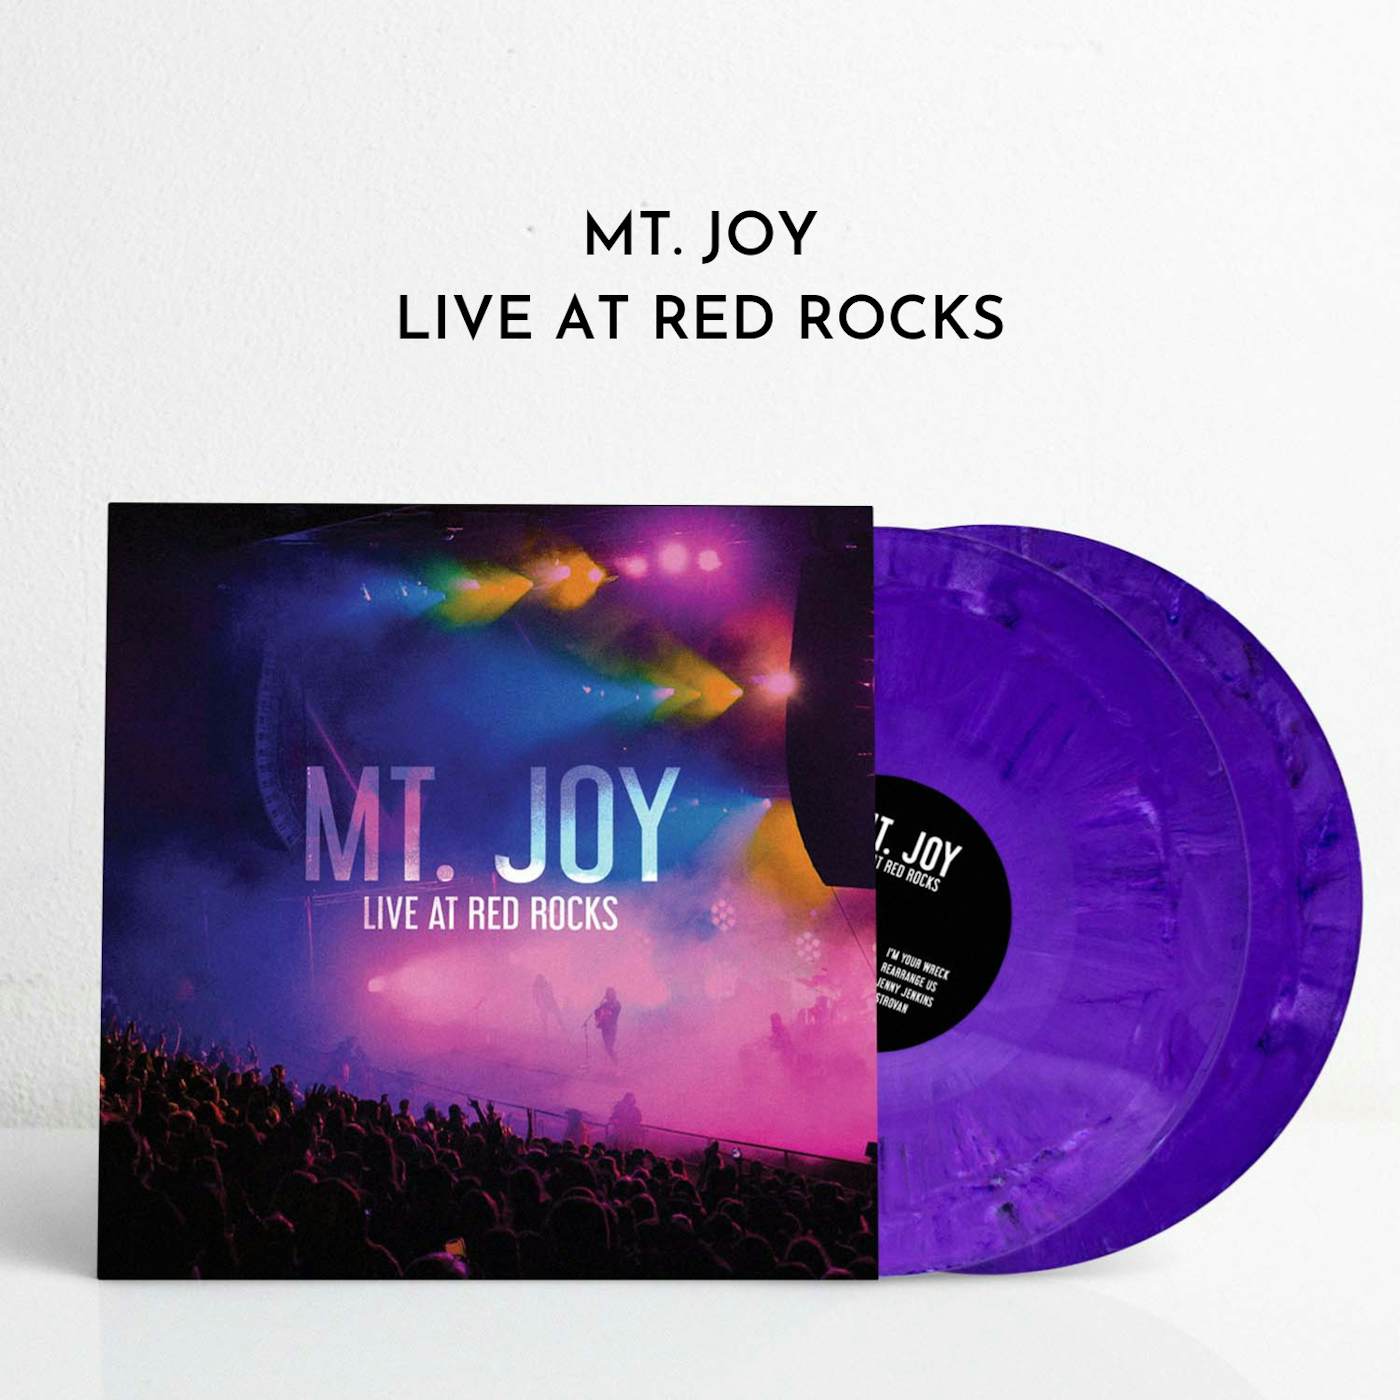 Mt. Joy Live at Red Rocks (Ltd. Edition Vinyl)